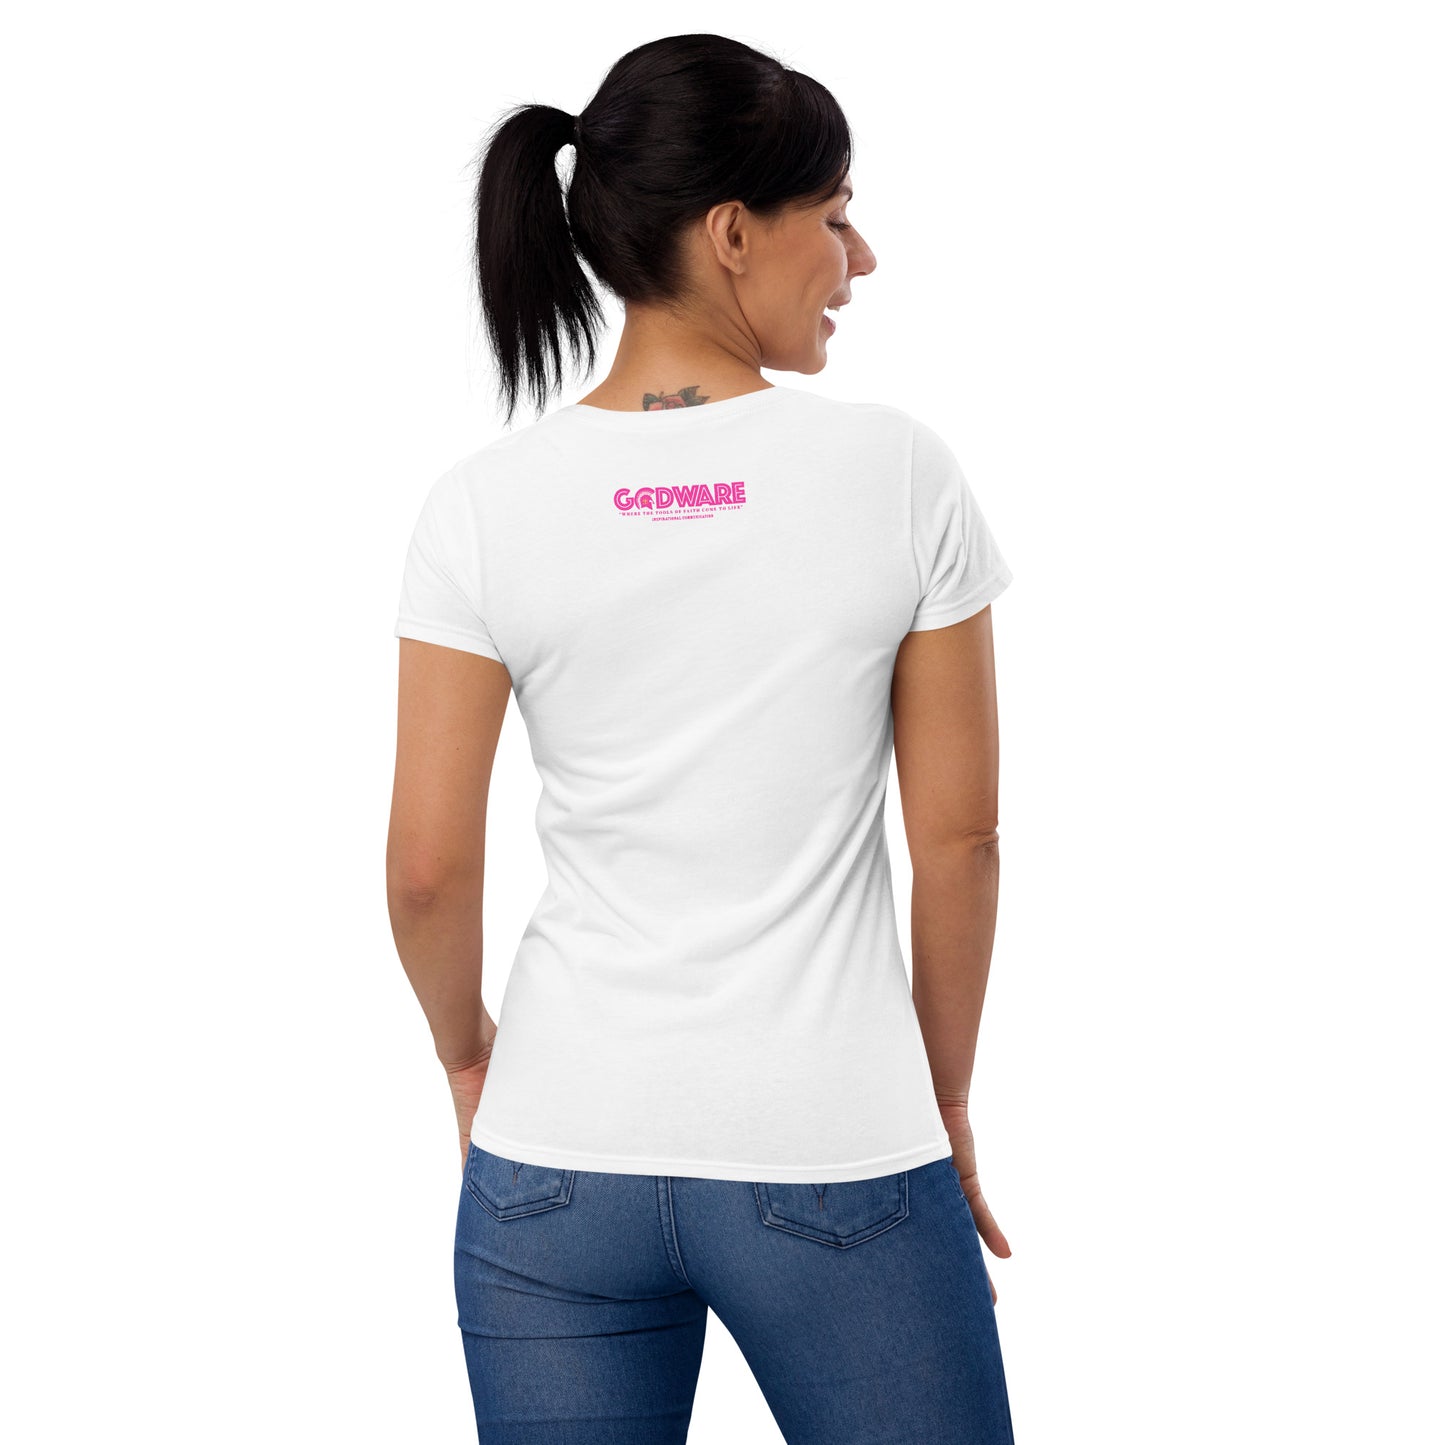 Attributes of God Women's short sleeve t-shirt - Pink print